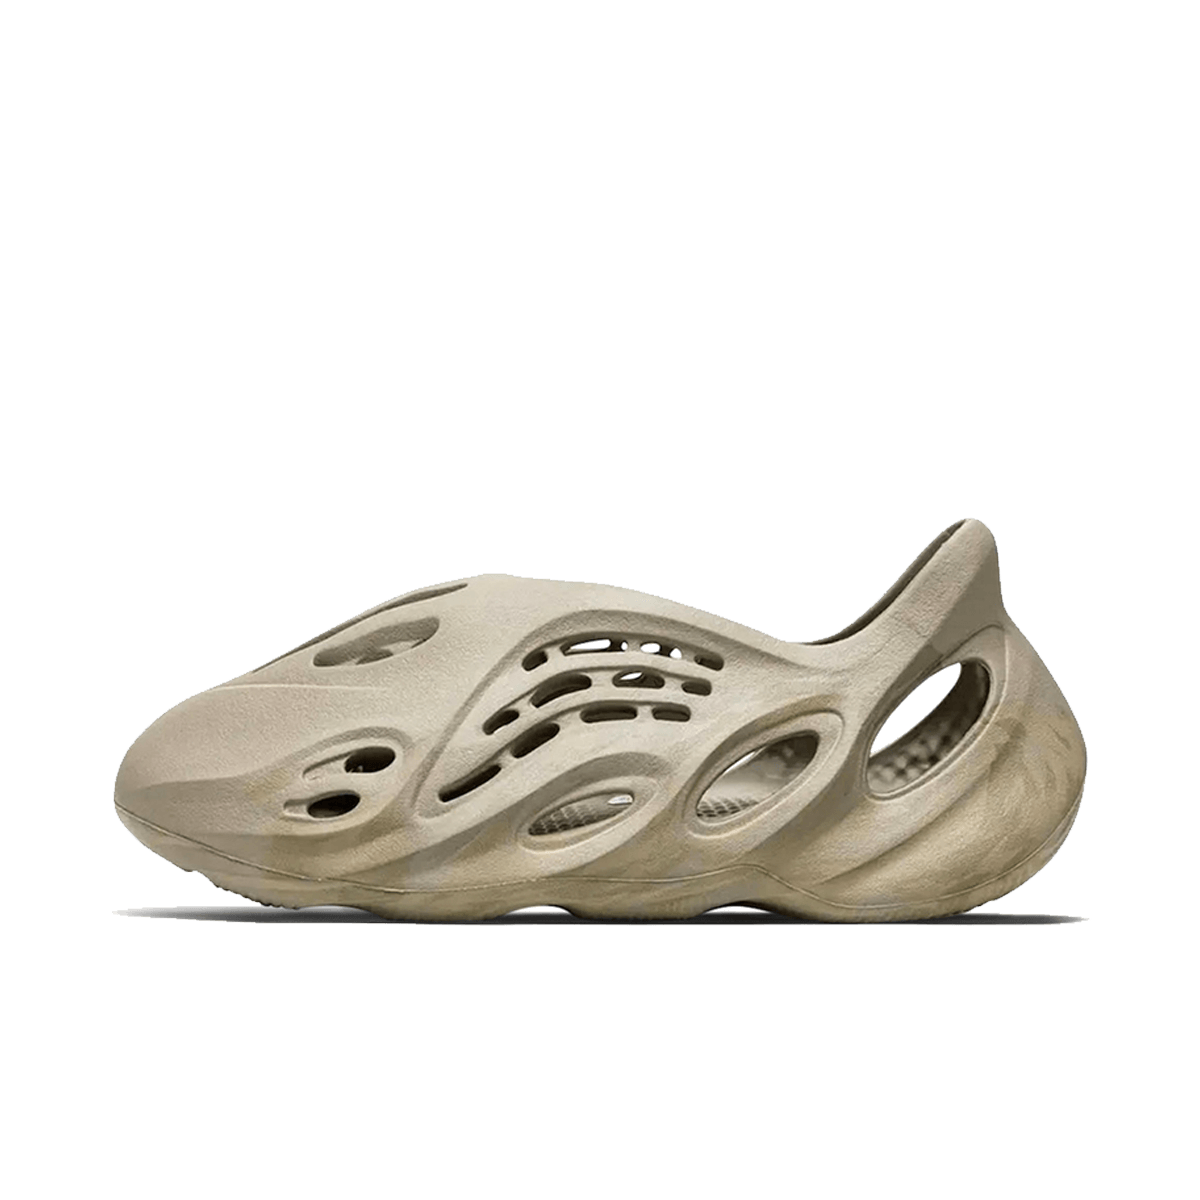 adidas Yeezy Foam Runner 'Stone Salt'